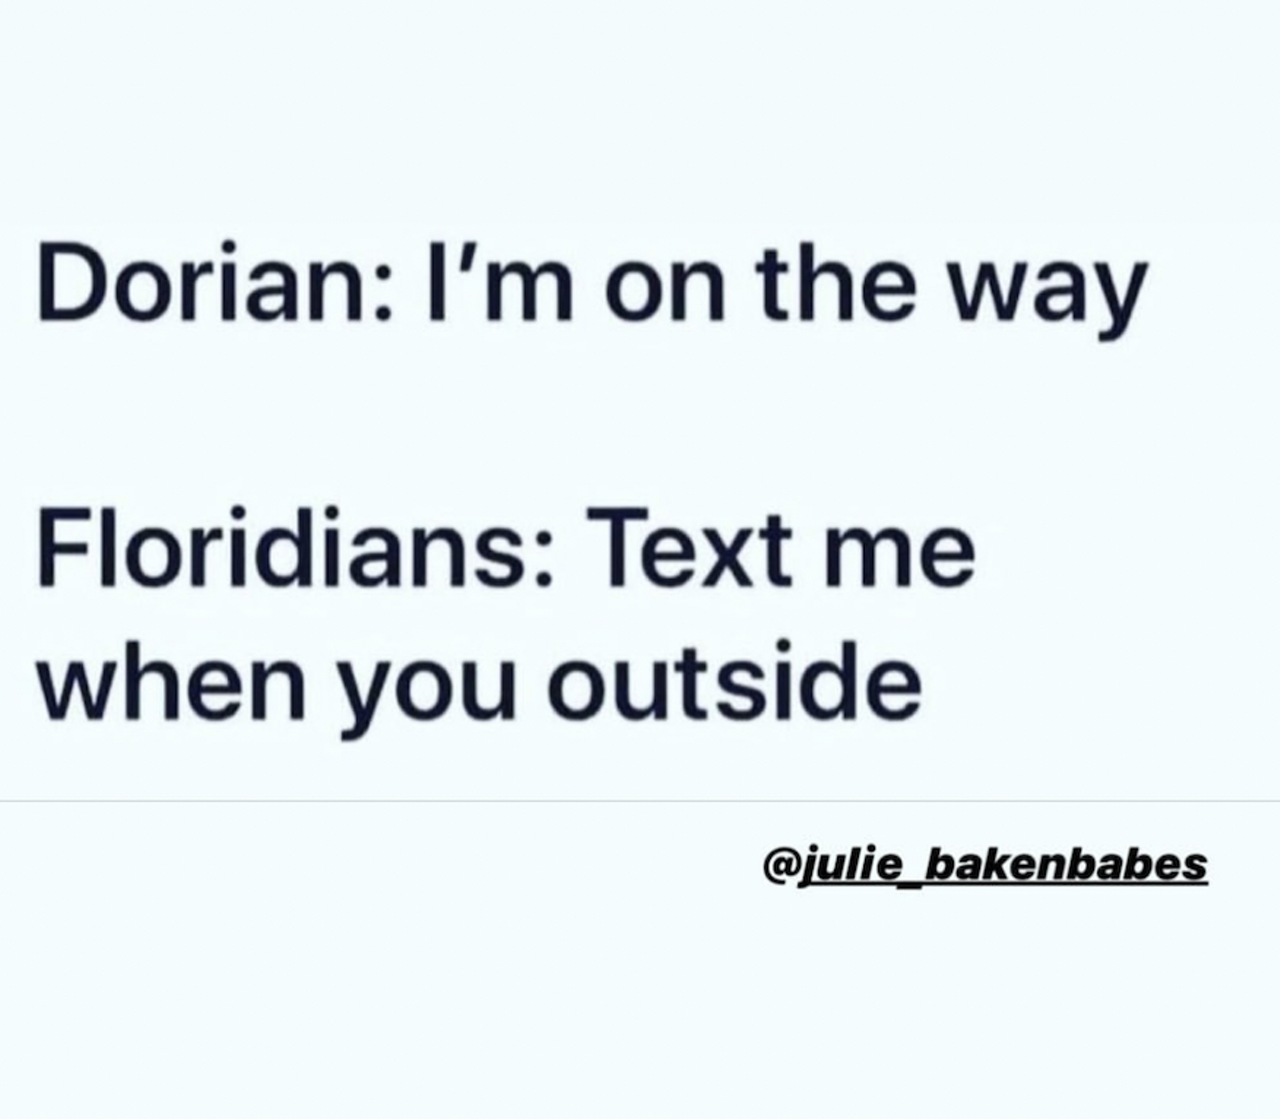 A surge of pointless Hurricane Dorian memes have already hit Florida